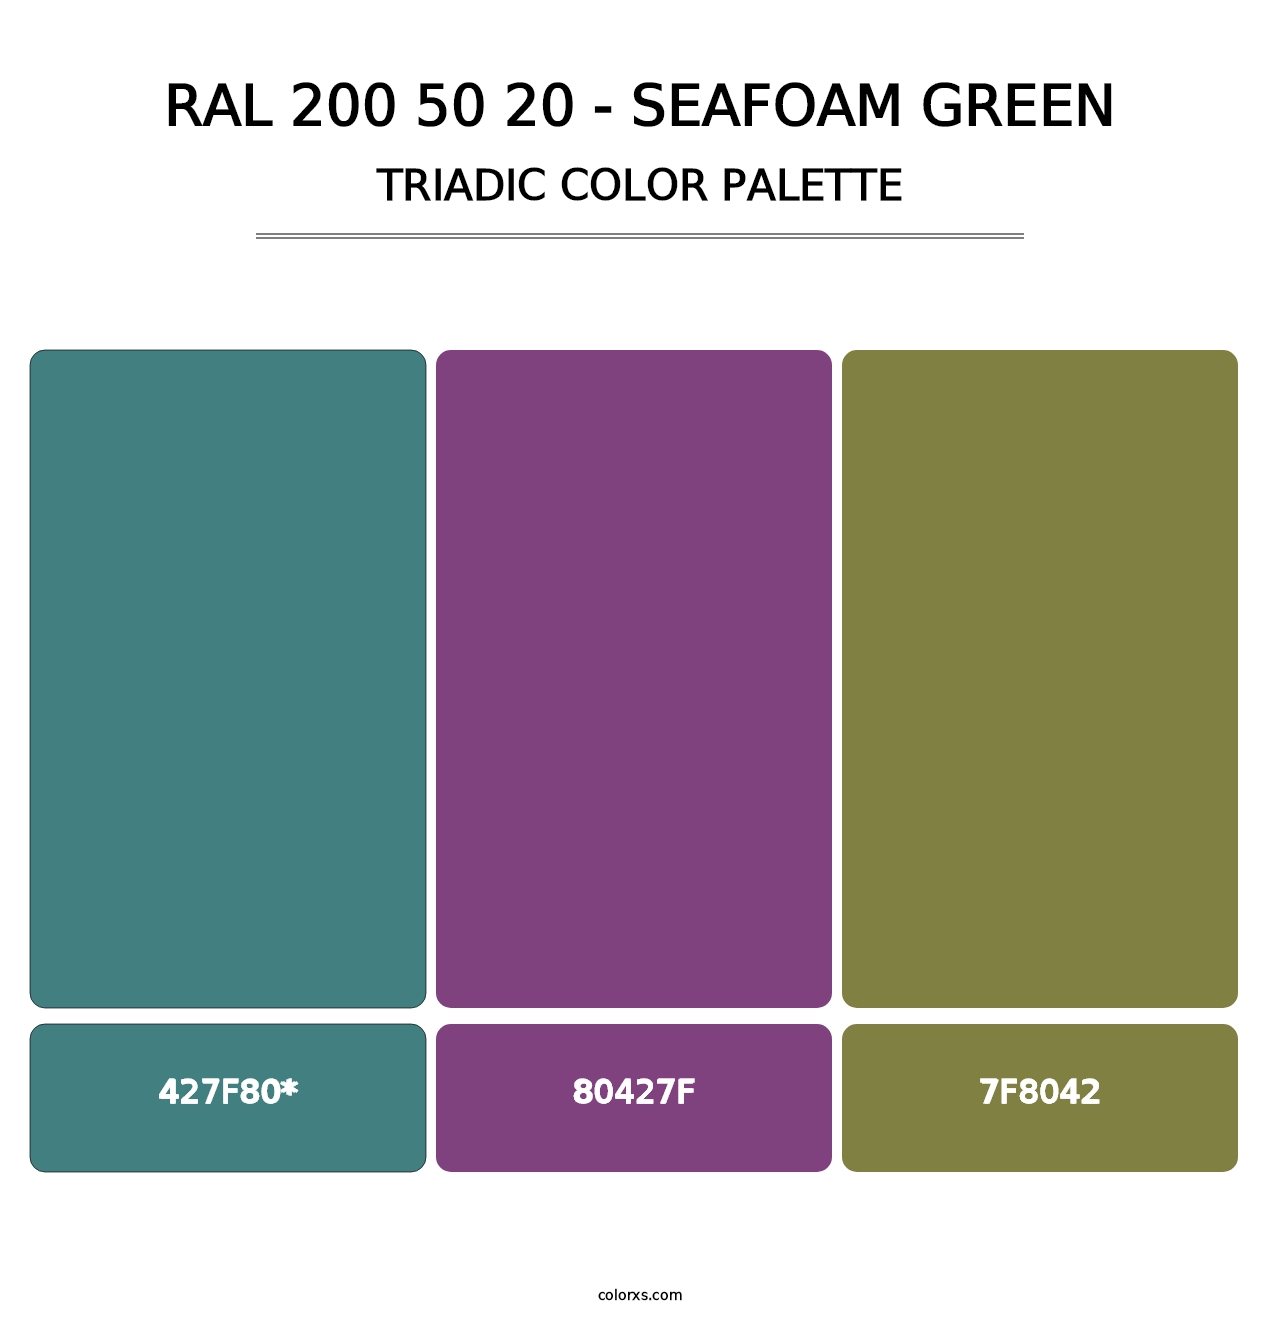 RAL 200 50 20 - Seafoam Green - Triadic Color Palette